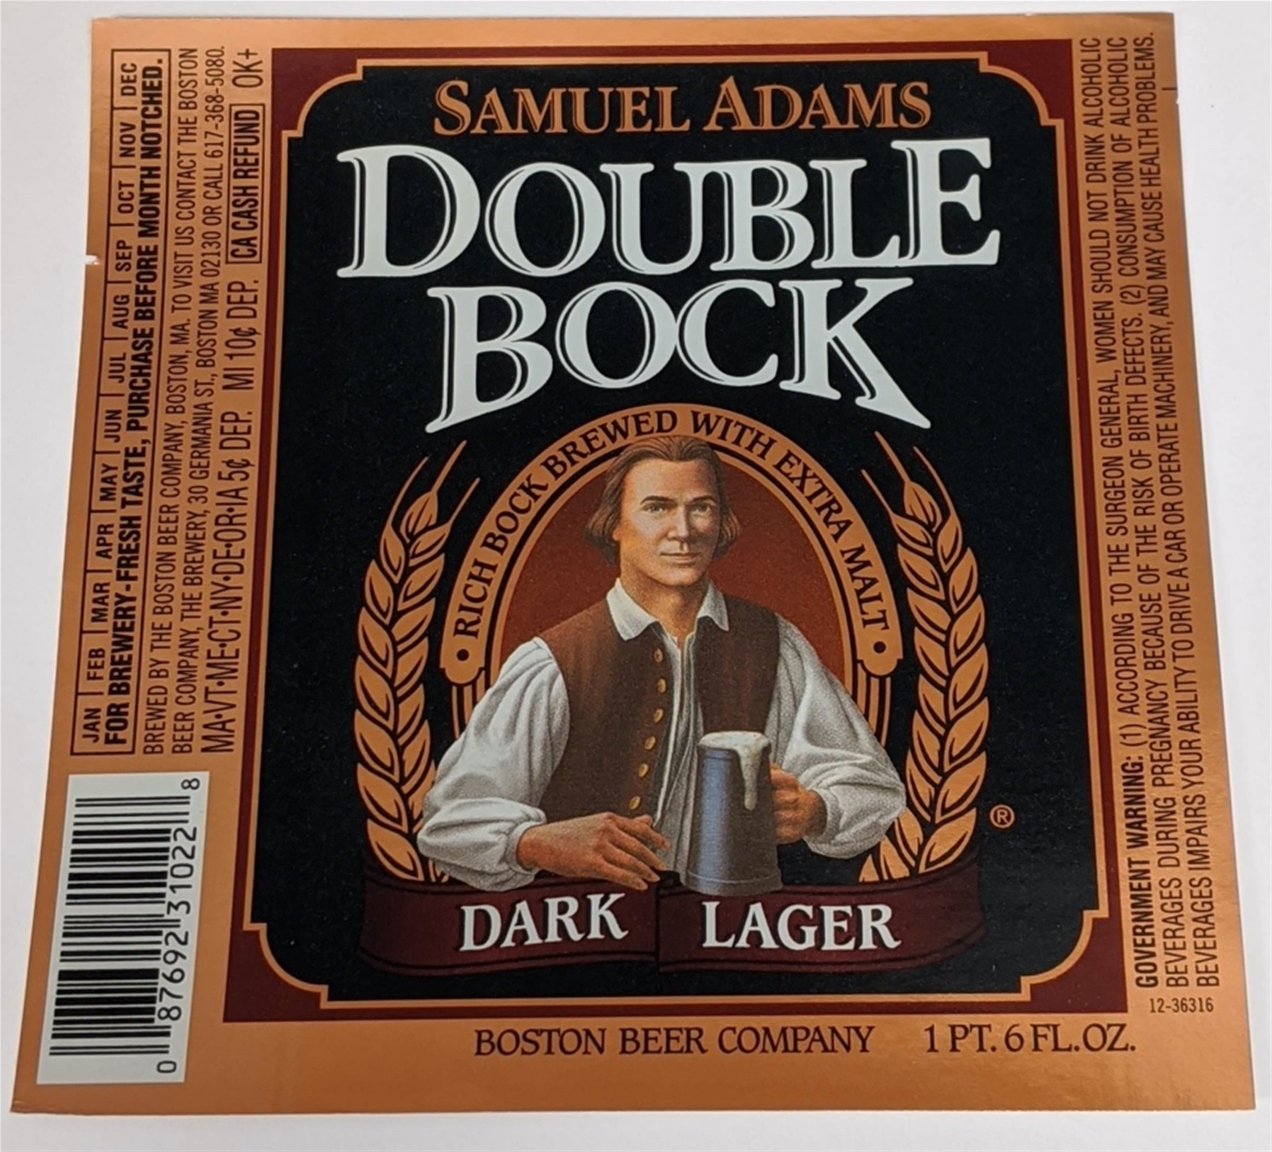 Samuel Adams Double Bock Label